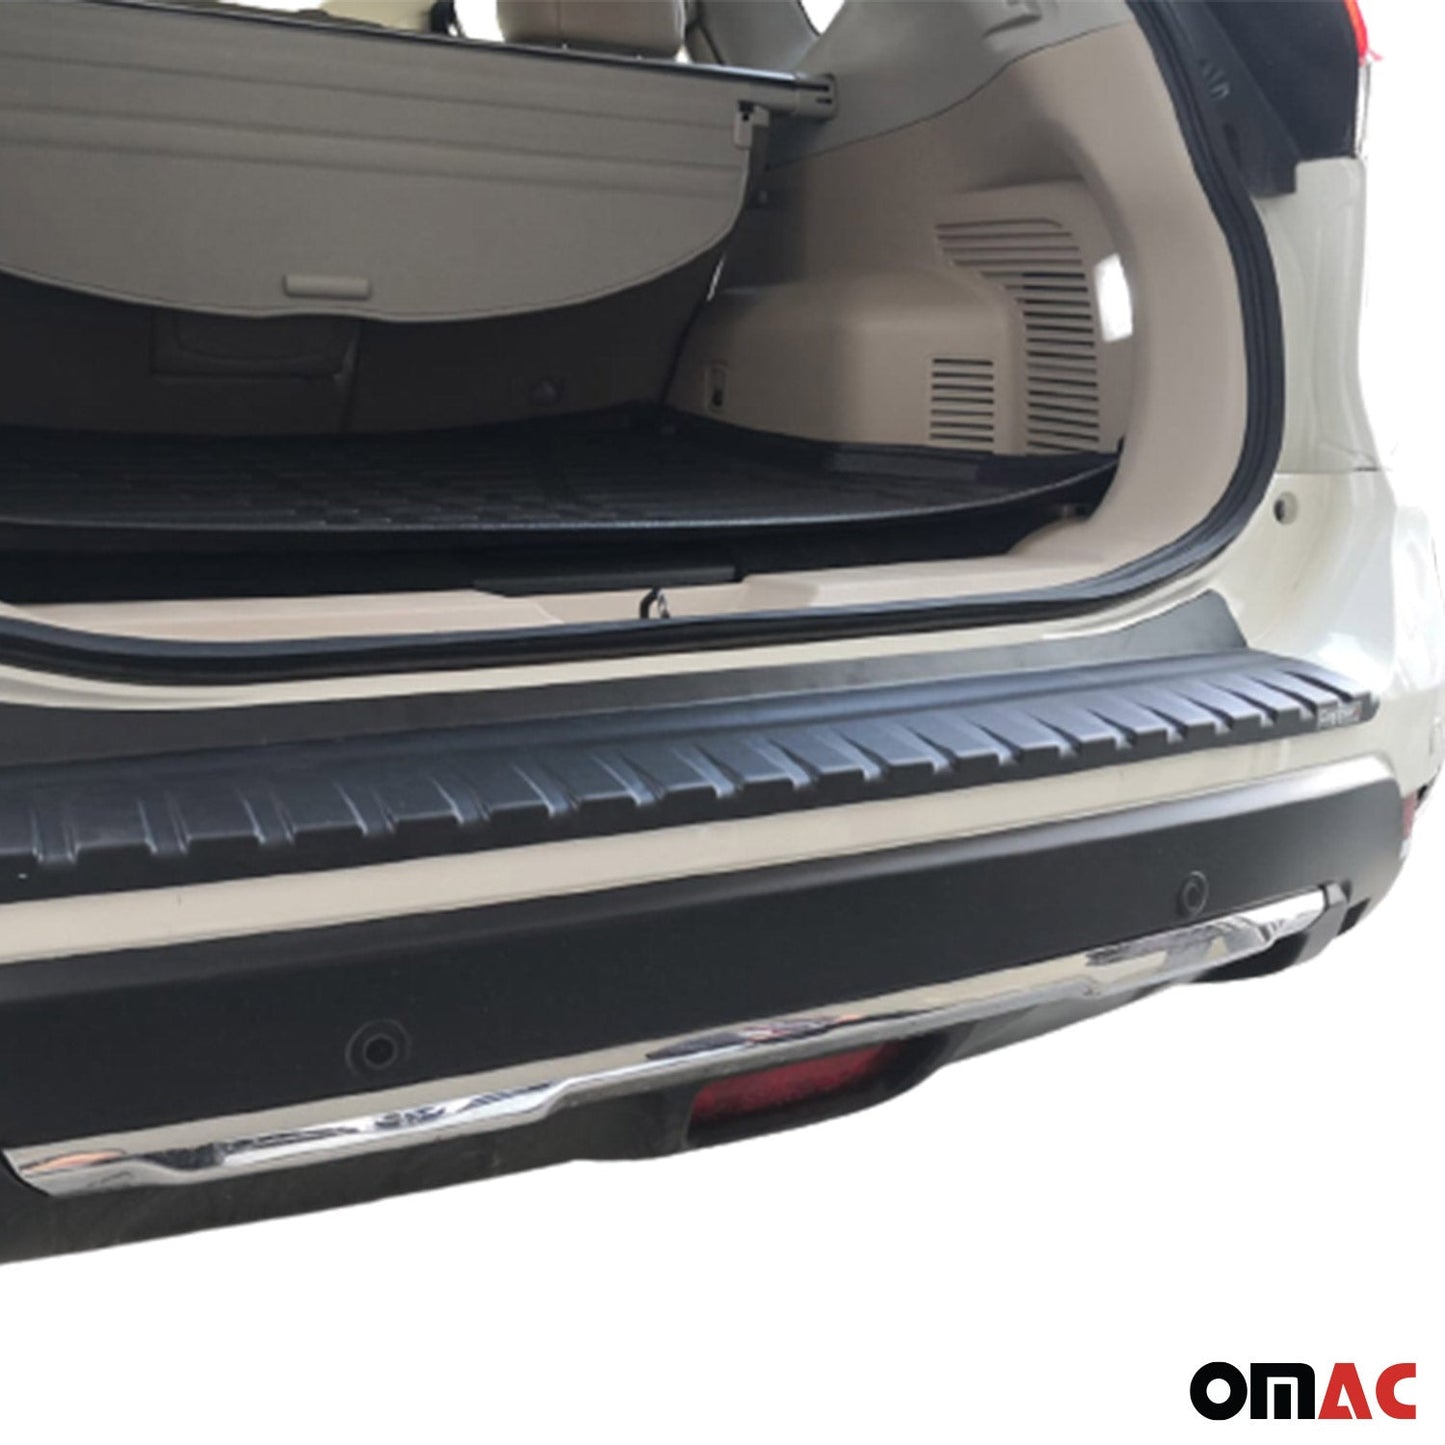 OMAC Rear Bumper Sill Cover Protector Guard for Nissan Rogue 2017-2020 Matte Black OMAC5025093FPT